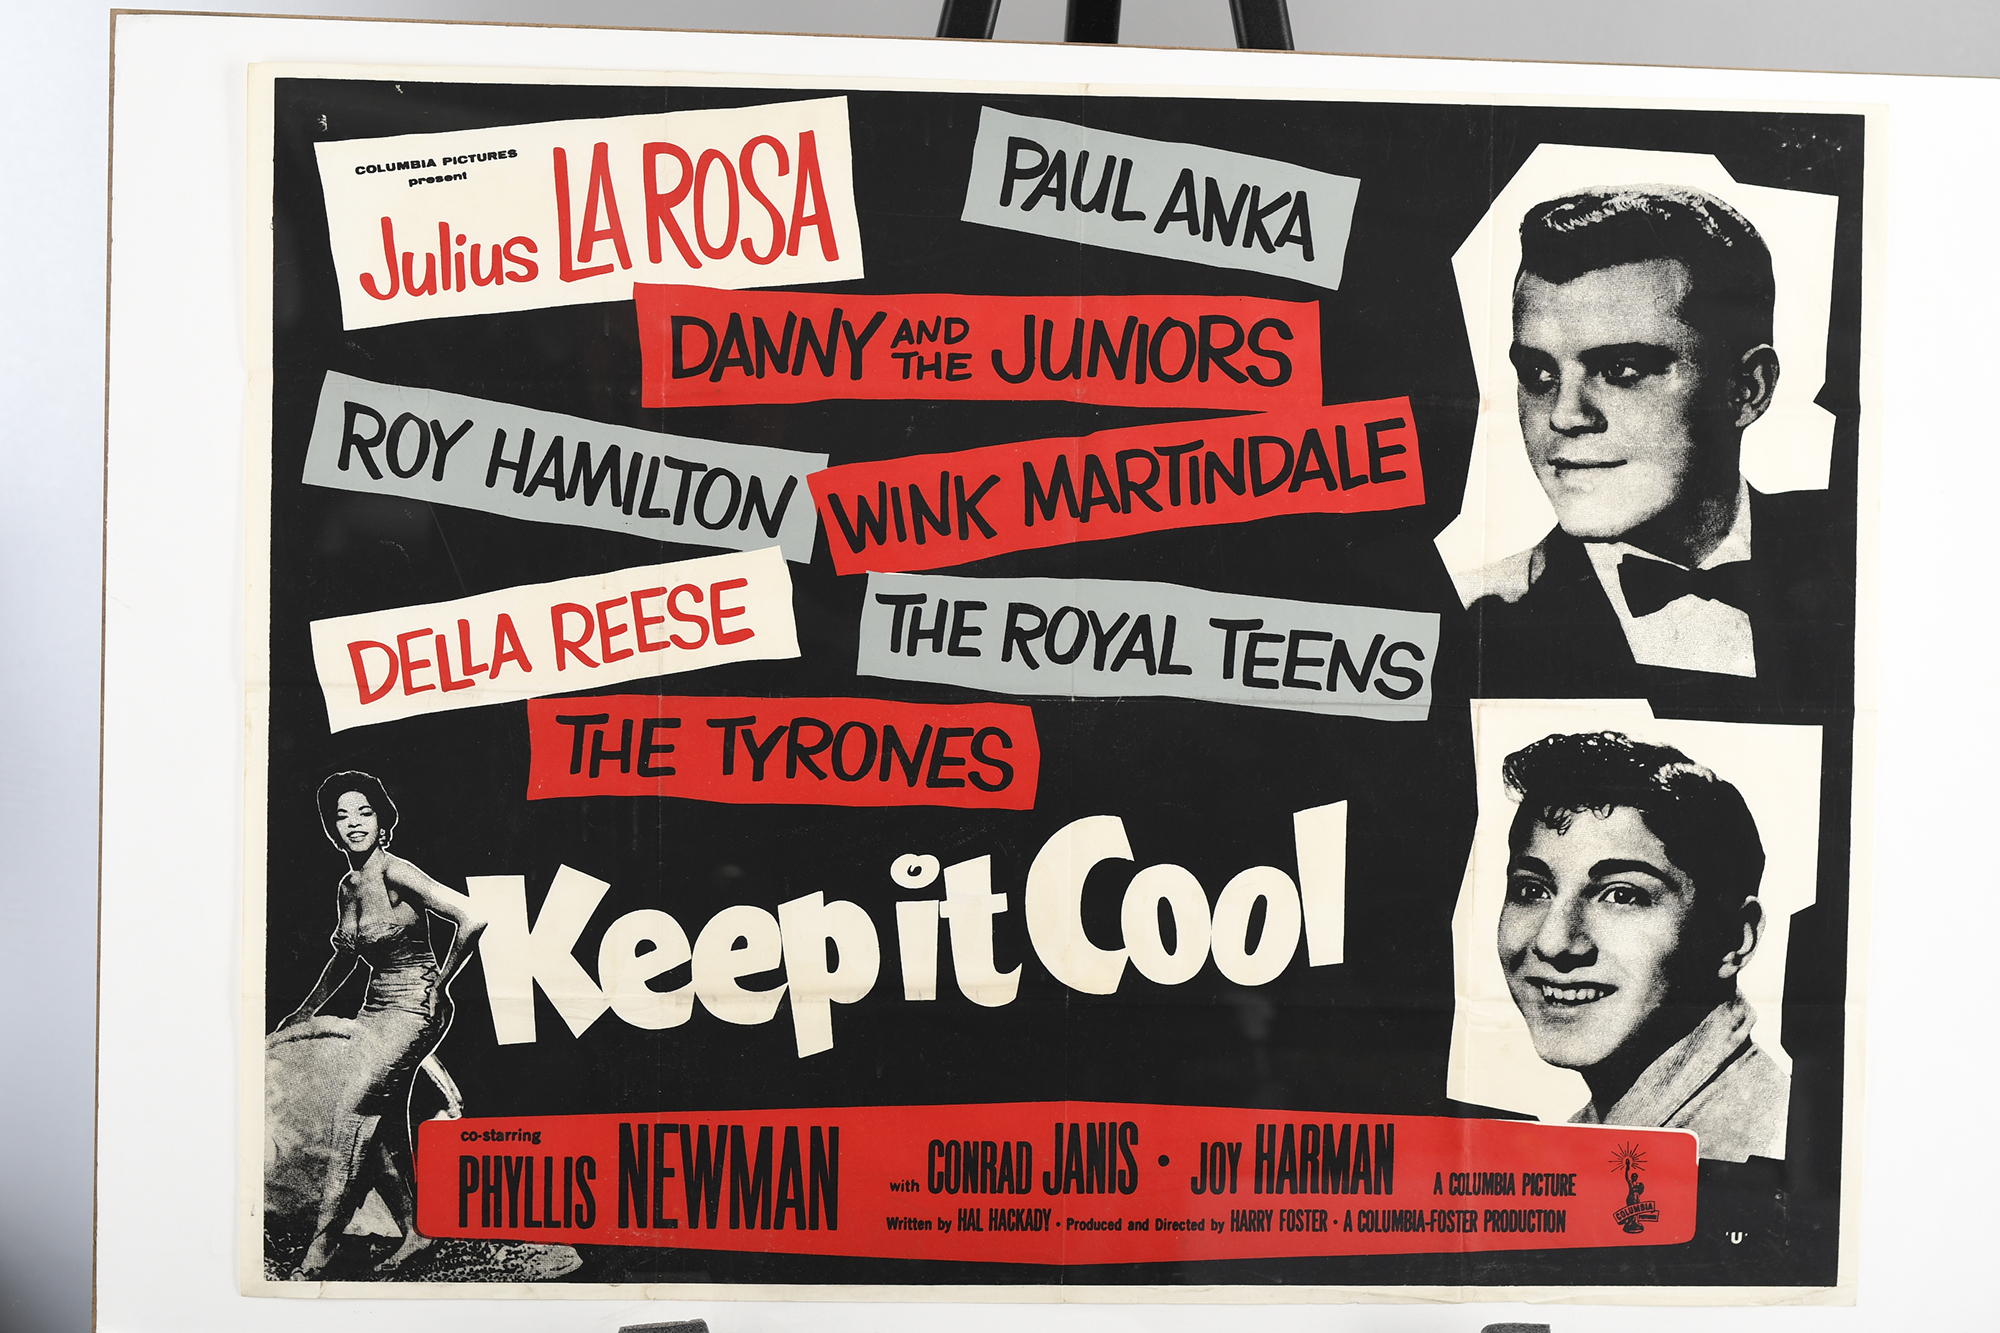 Original UK "Keep it Cool" AKA "Let's Rock" Film Poster